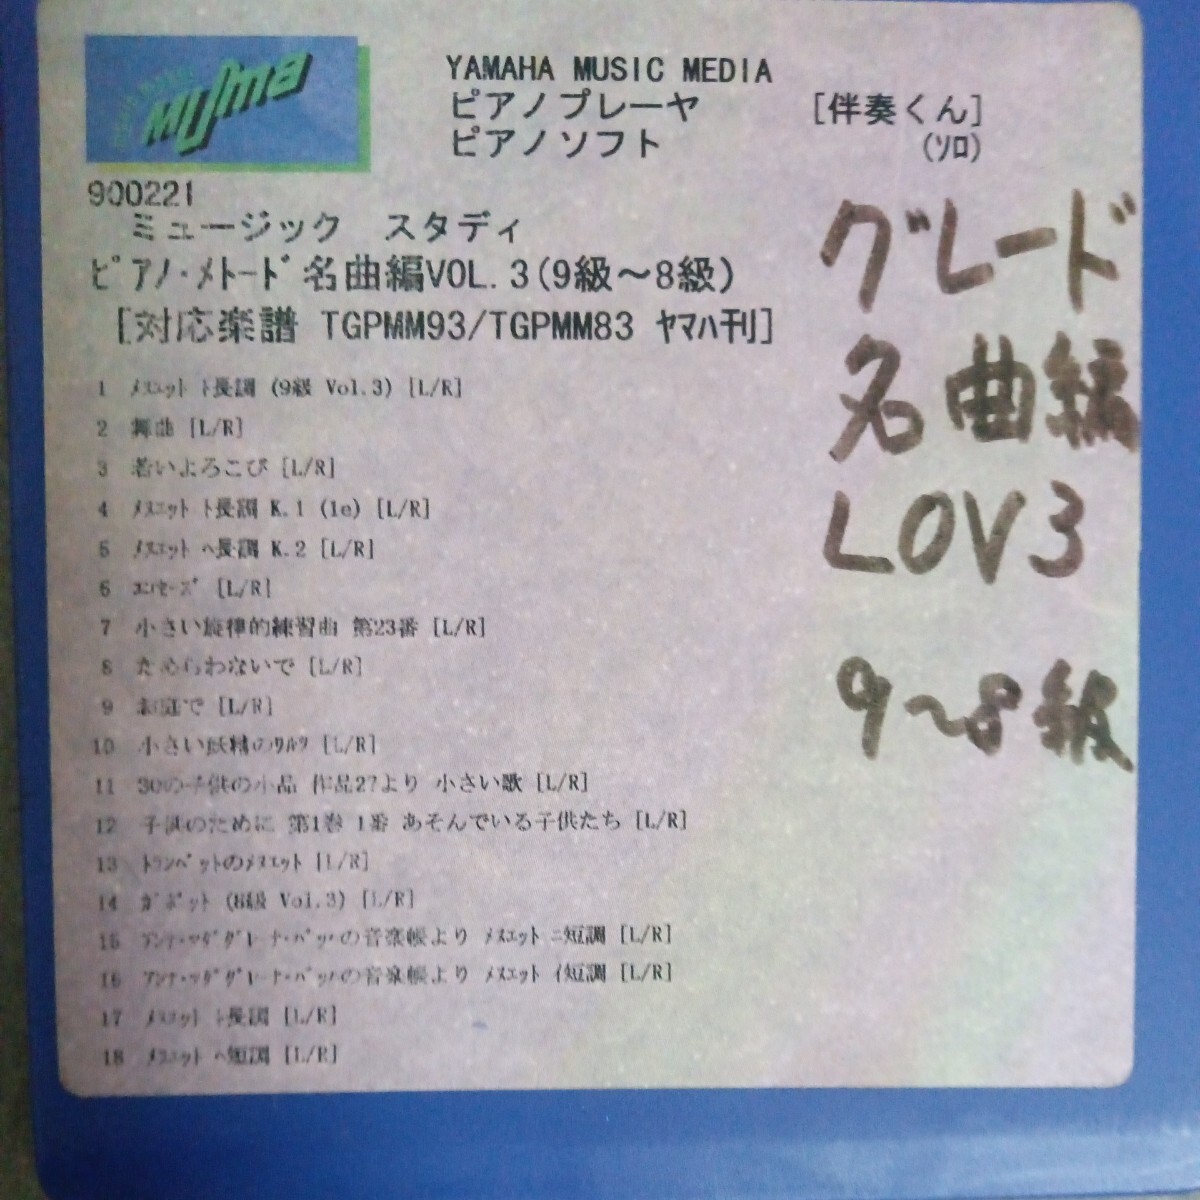  operation not yet verification floppy piano player .. kun music * start ti piano meto-do masterpiece compilation Yamaha YAMAHA